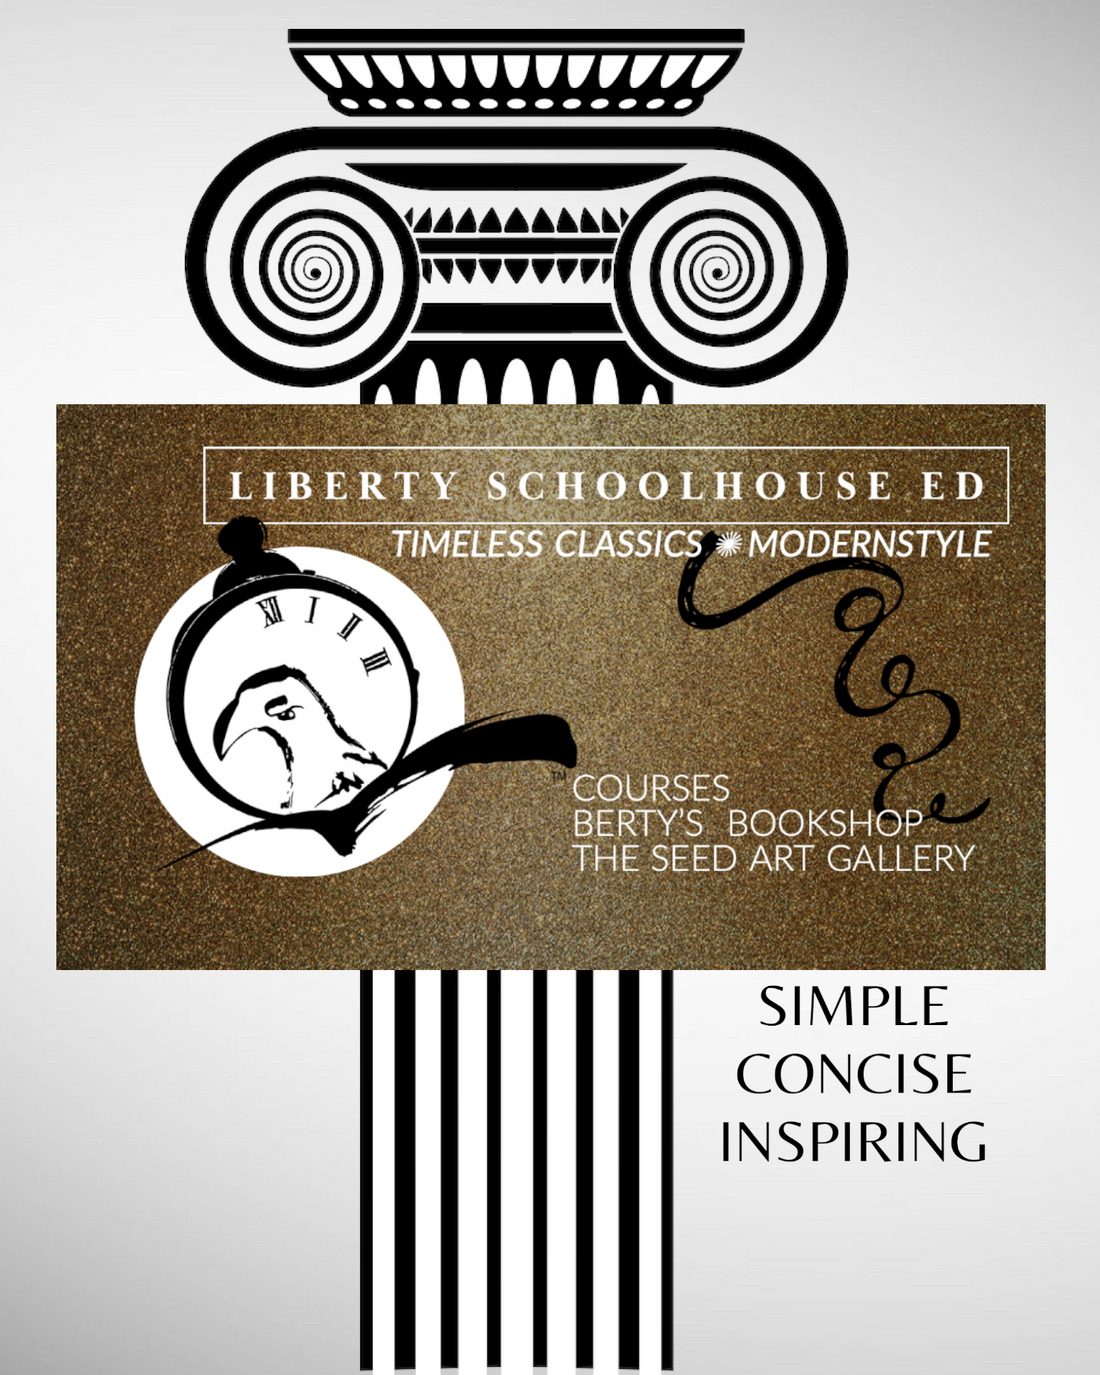 LIBERTY SCHOOLHOUSE ED GIFT CARD